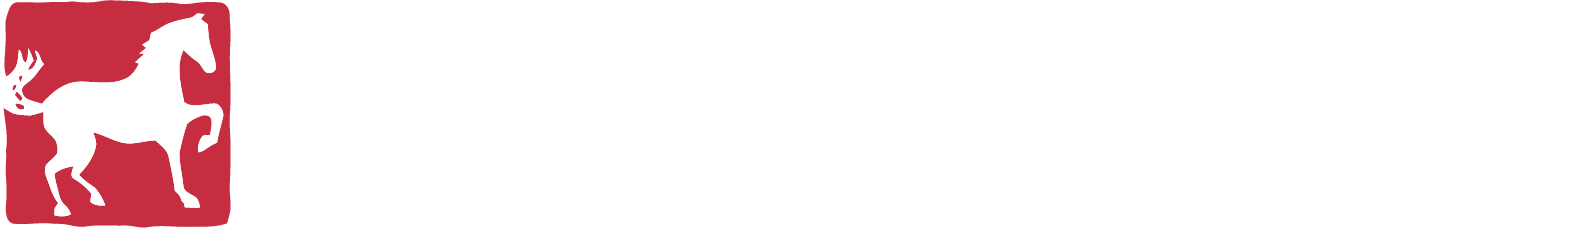 WhiteHorse Finance logo large for dark backgrounds (transparent PNG)